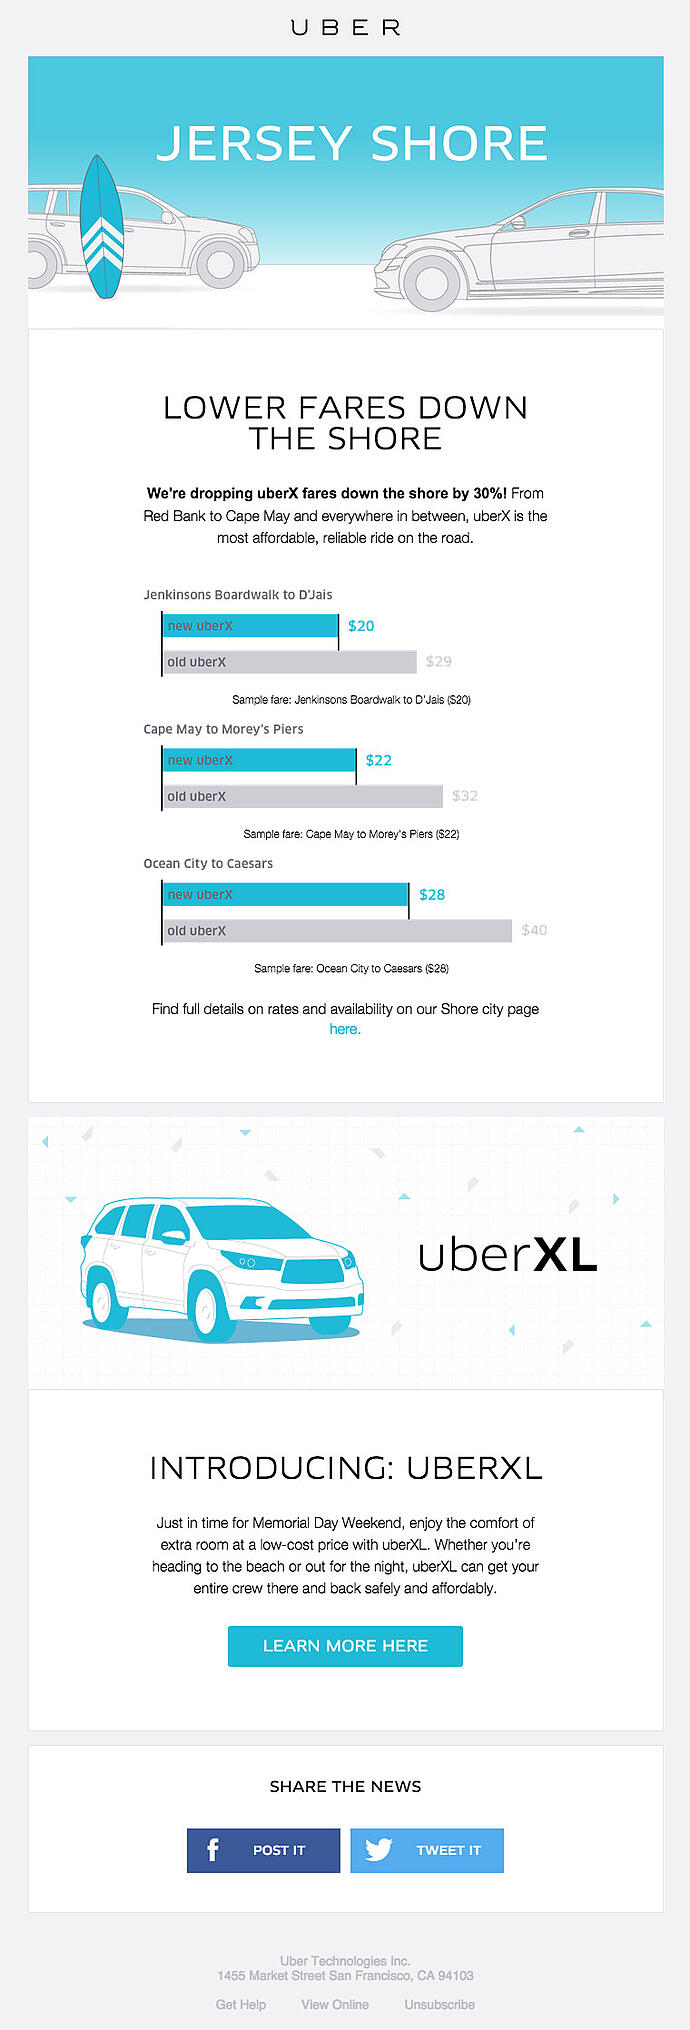 Uber_lower_fares_email.jpg.